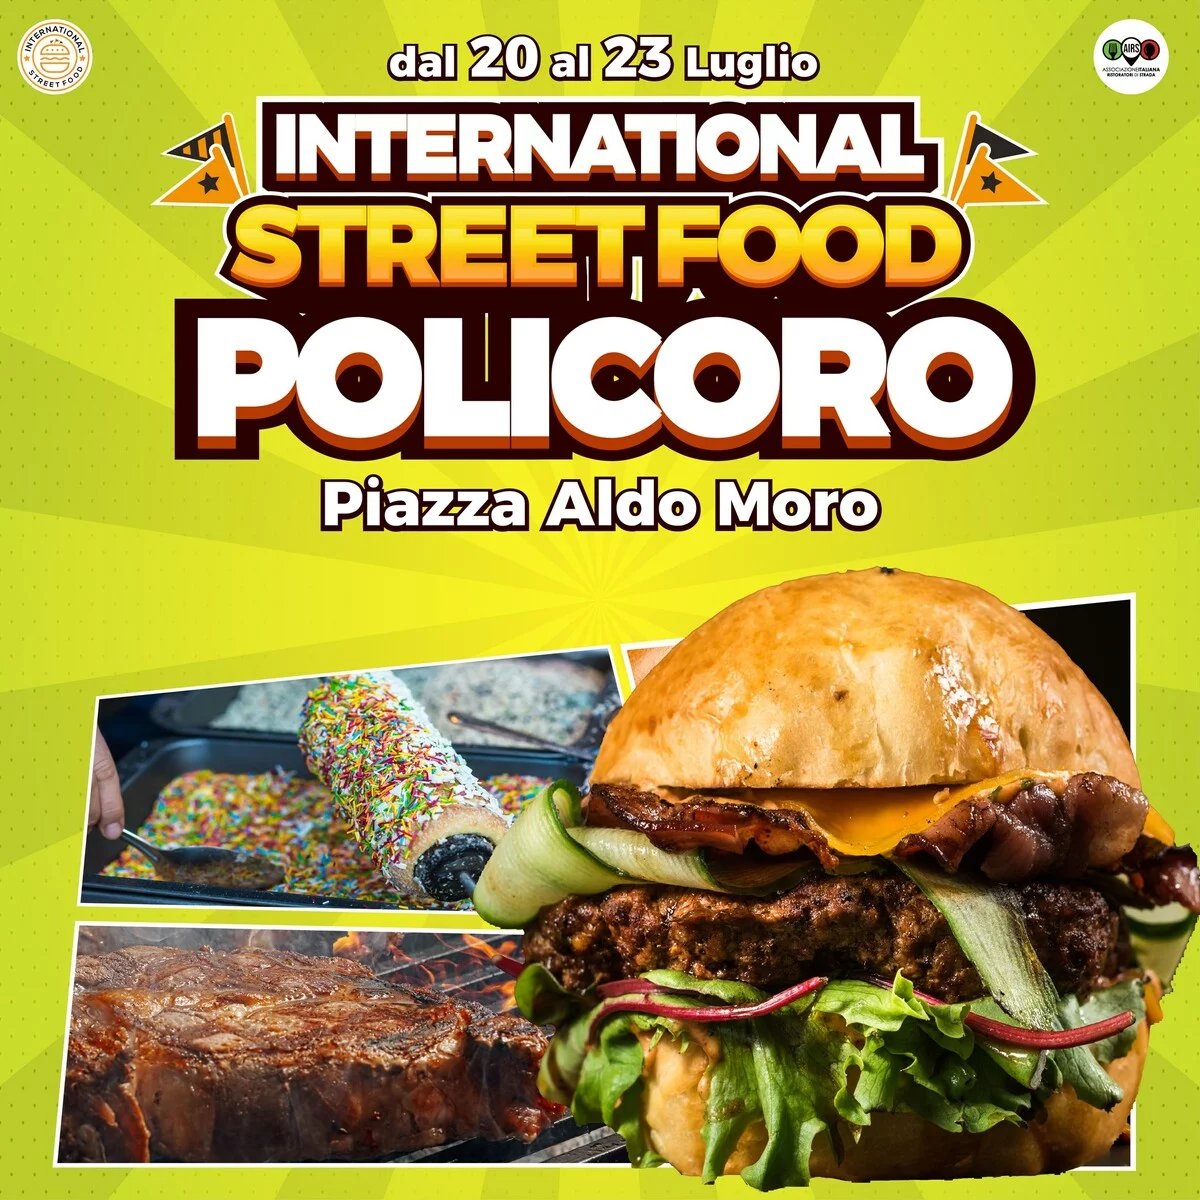 International Street Food. Policoro